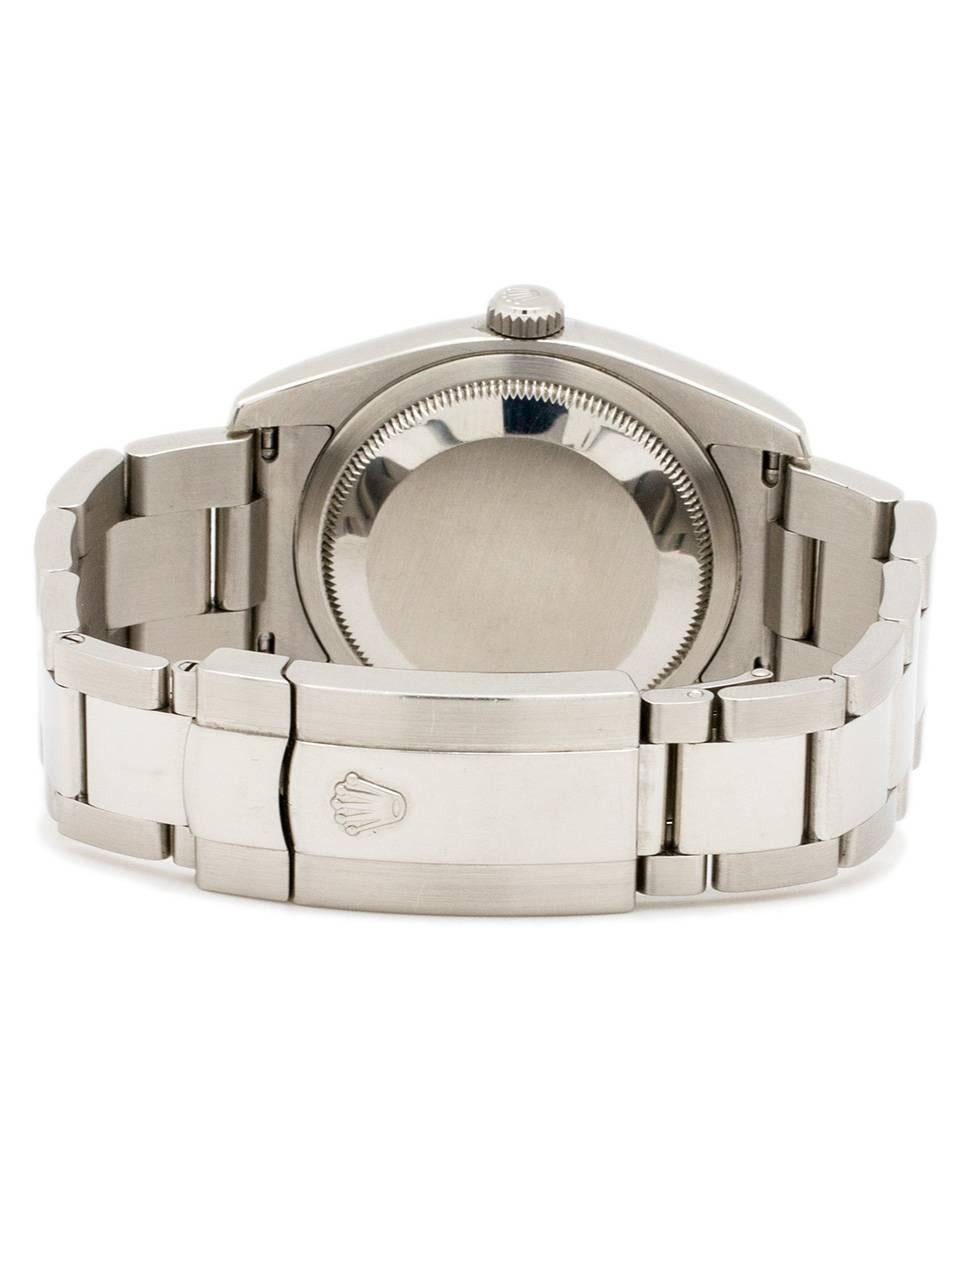 Men's Rolex Stainless Steel Datejust Self Winding Wristwatch Ref 16200, circa 2002